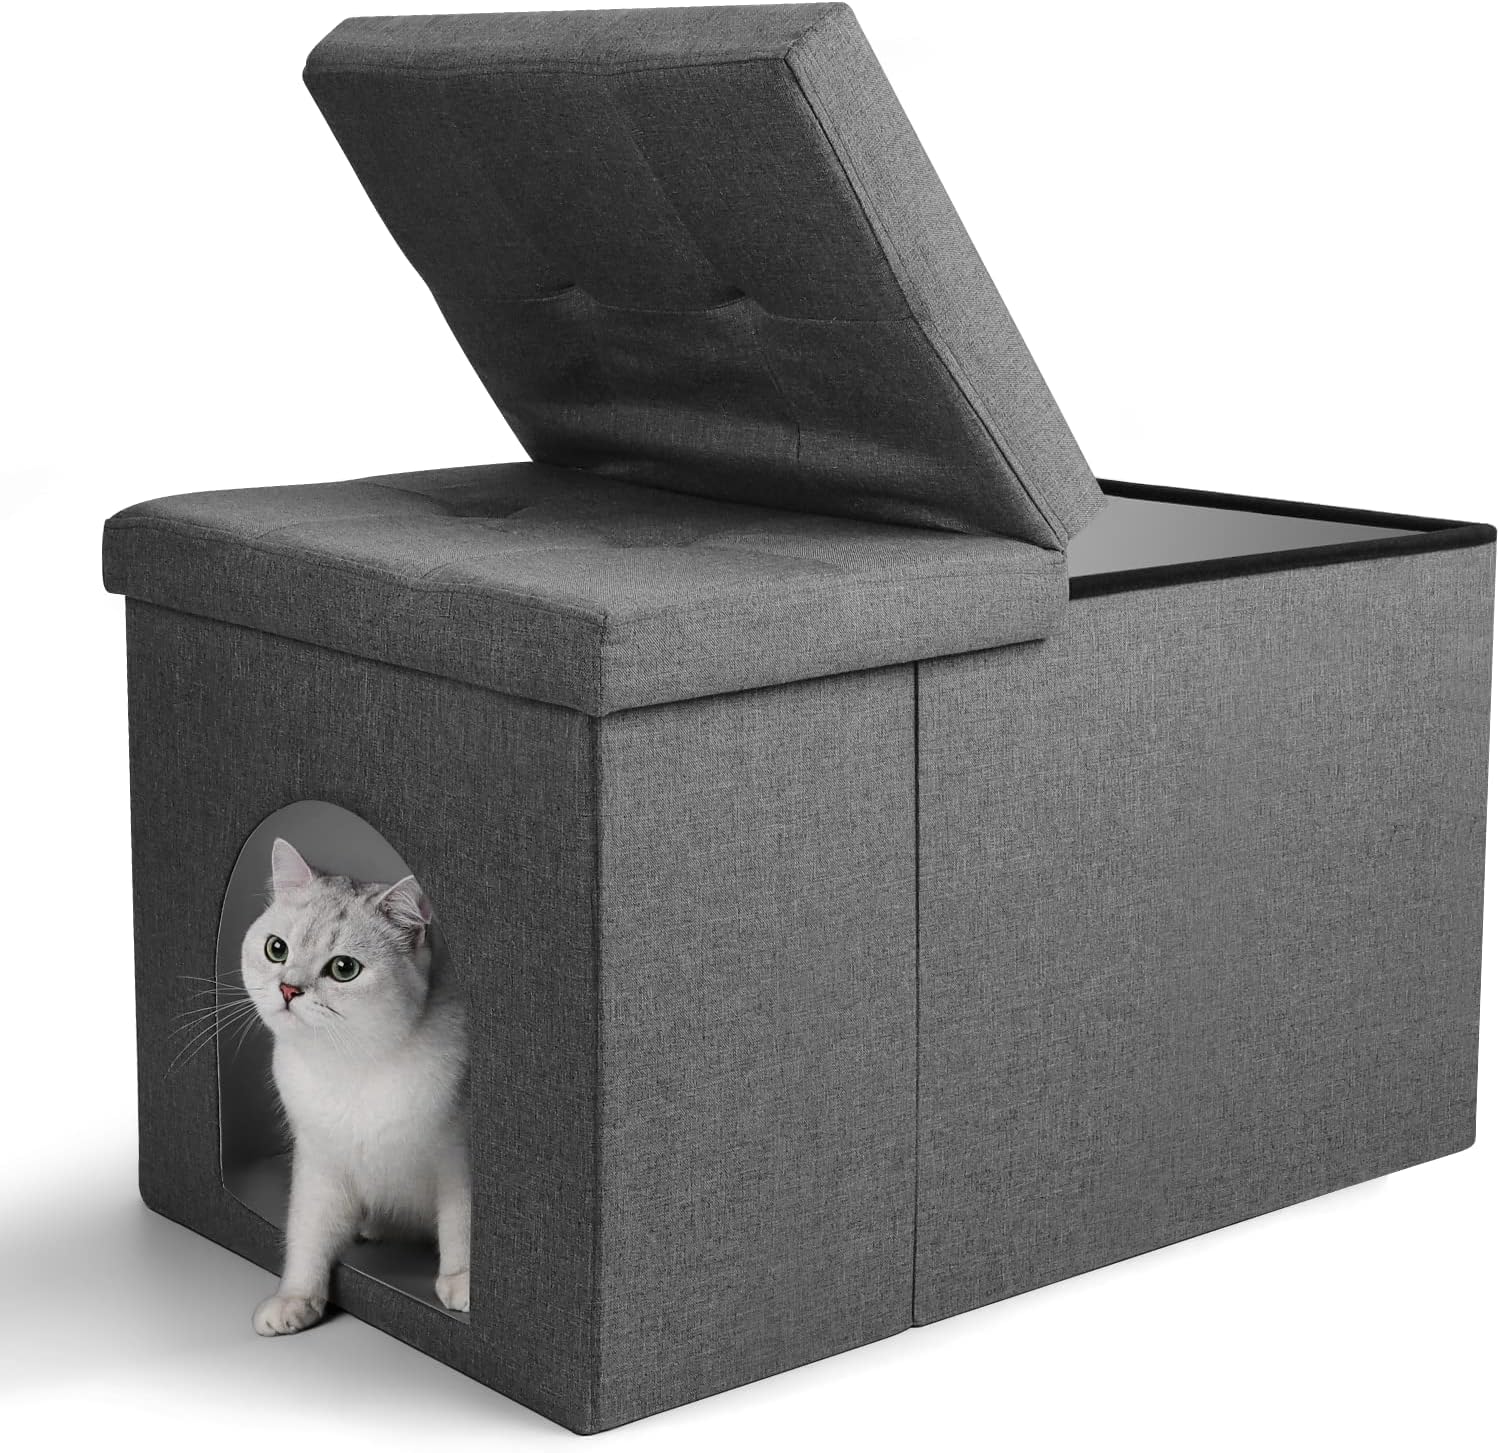 Cat Litter Box Enclosure, Hidden Litter Box Furniture Ottoman with Flip-Up Lid, Large Dog Proof | Waterproof Interior | Odor Control Litter Box, 29.9 x 21.6 x 19.7 Inches, Grey